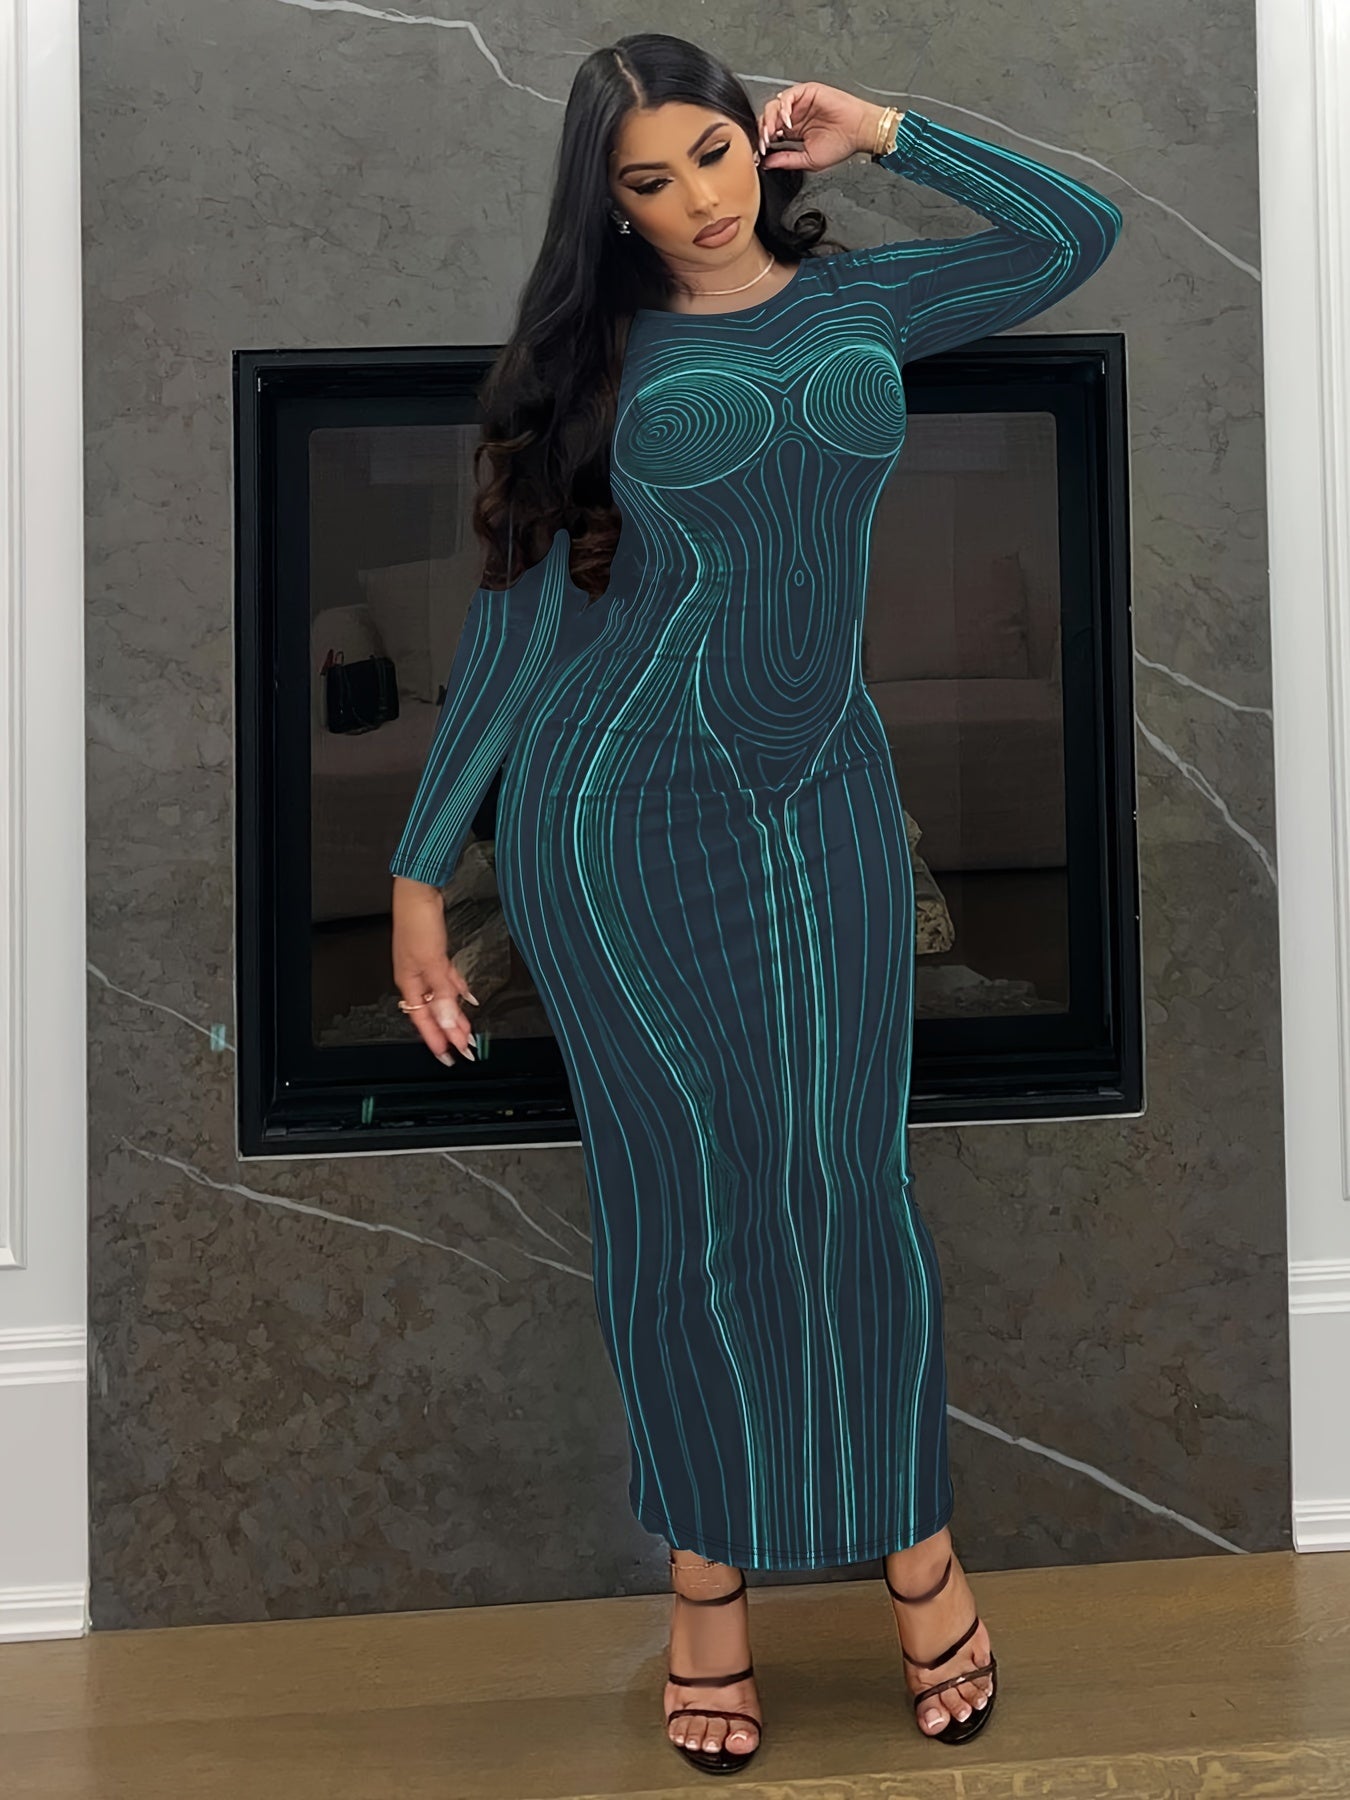 Antmvs Plus Size Sexy Dress, Women's Plus Stripe Print Long Sleeve Round Neck Backless Skinny Maxi Dress